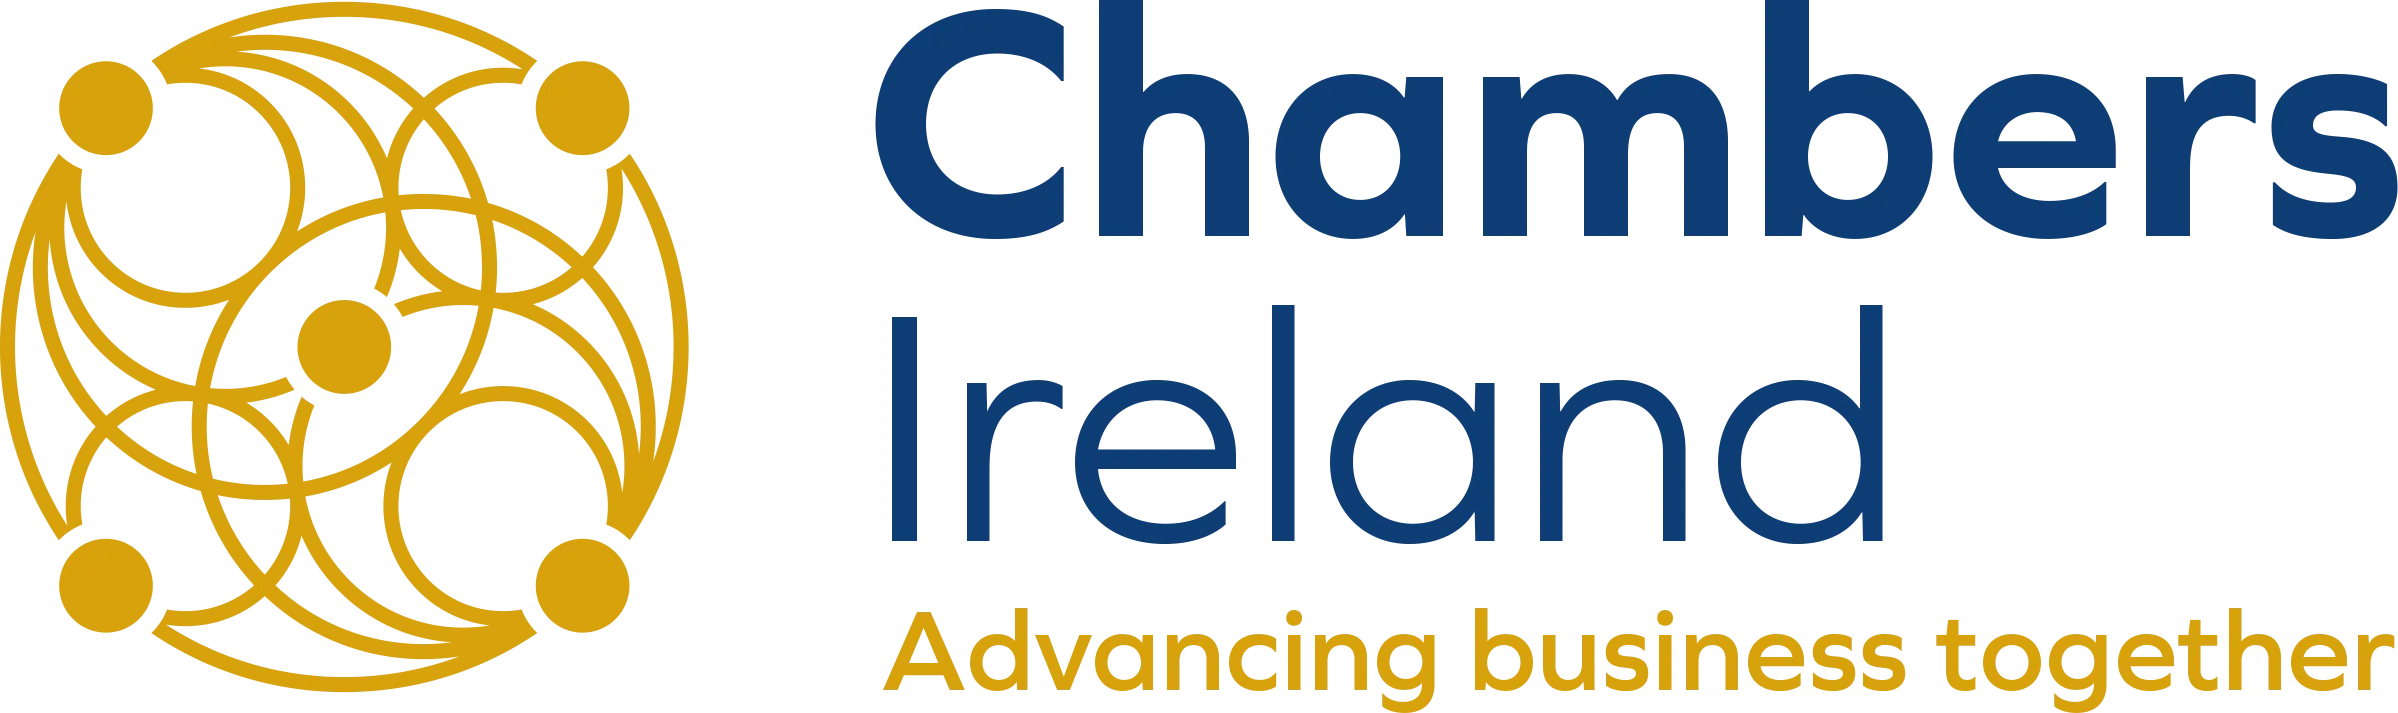 Chambers Ireland logo